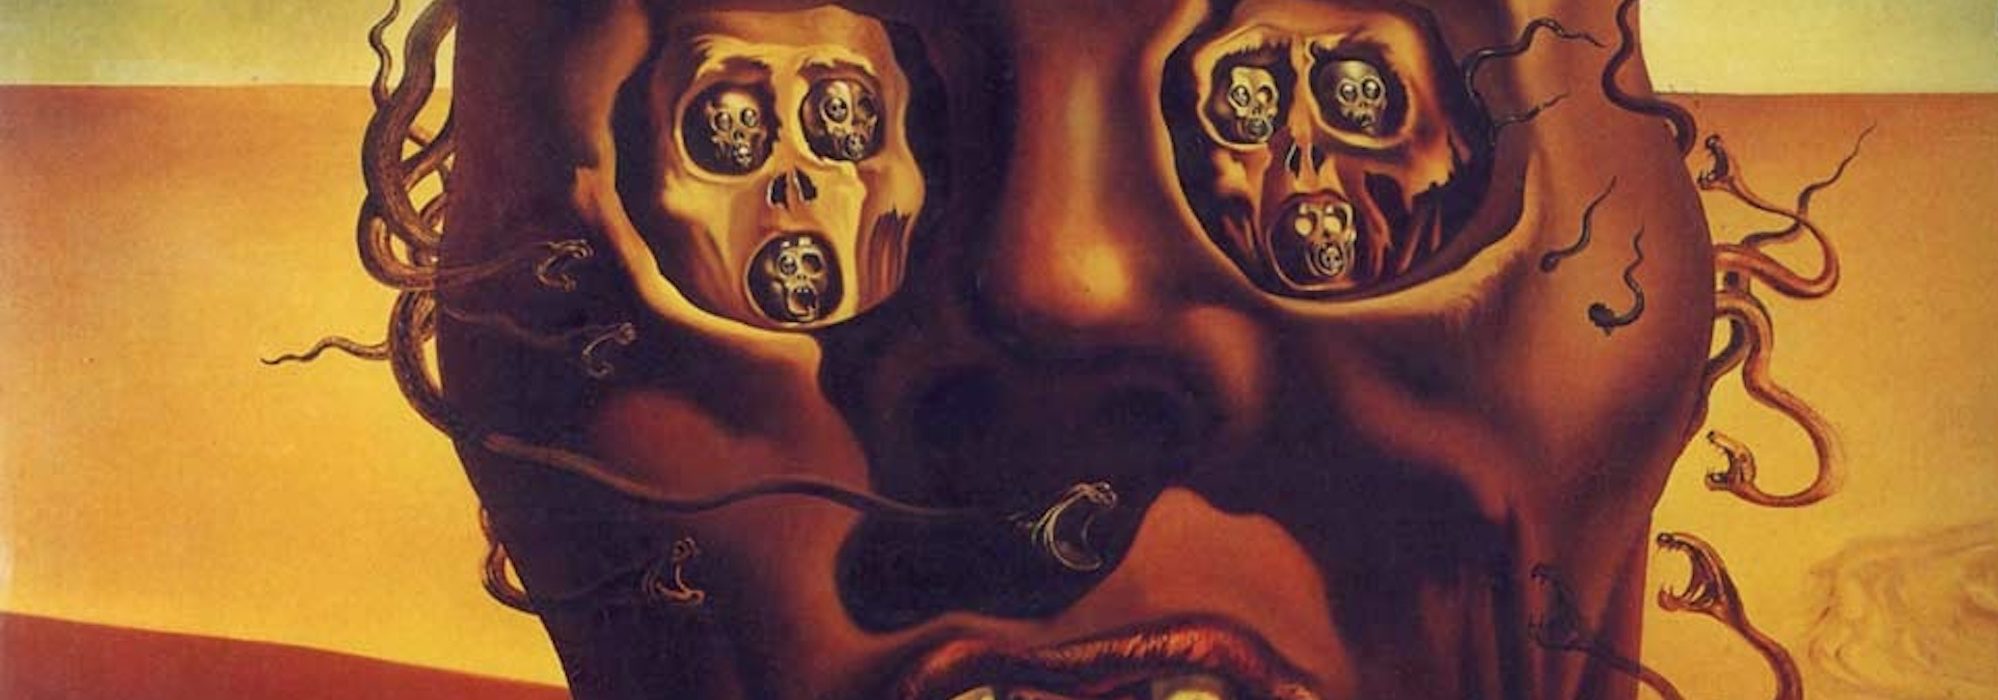 O Rosto da Guerra - Salvador Dalí